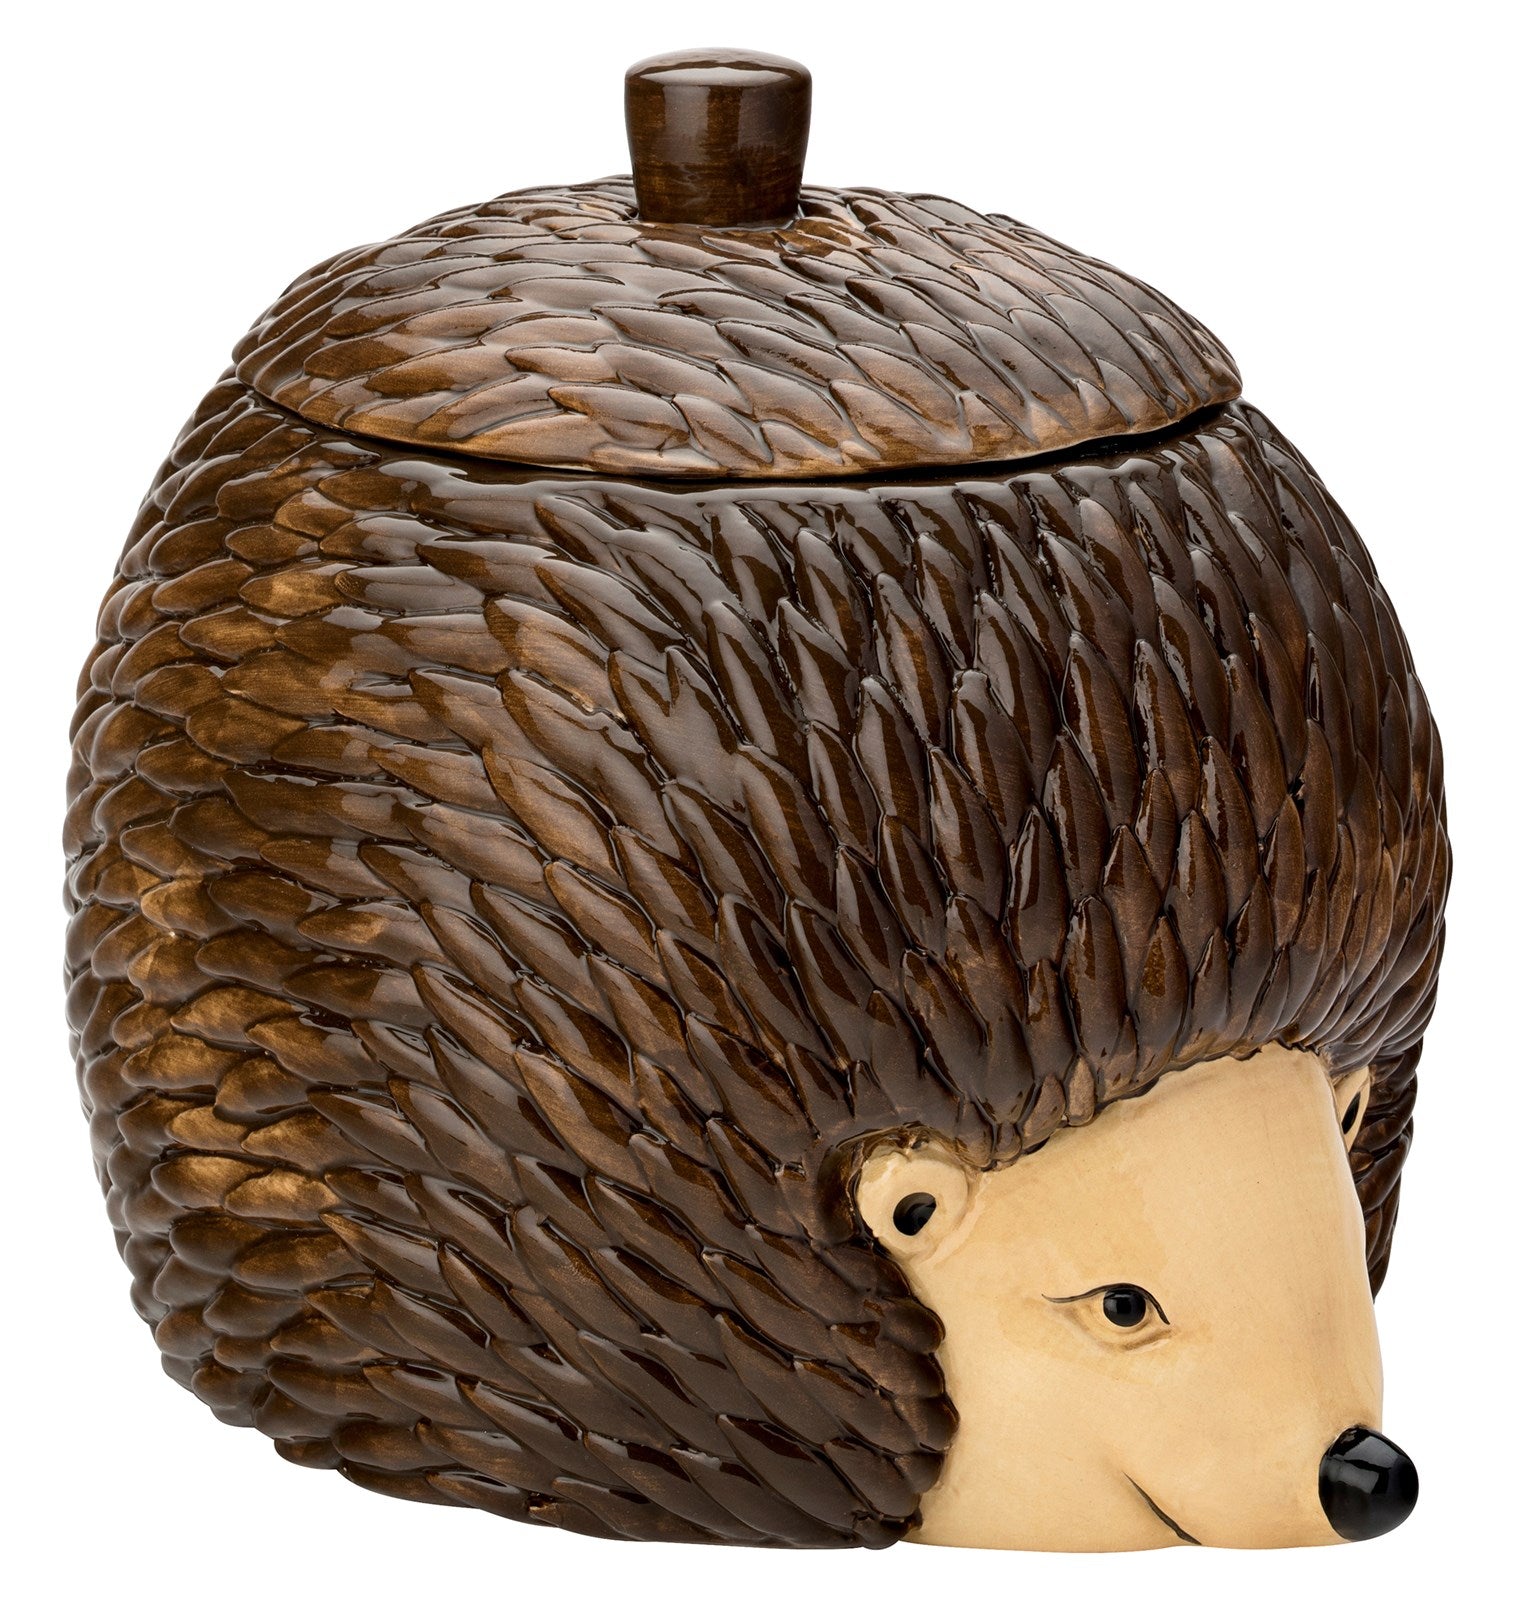 The English Tableware Company Edale Hedgehog Cookie jar